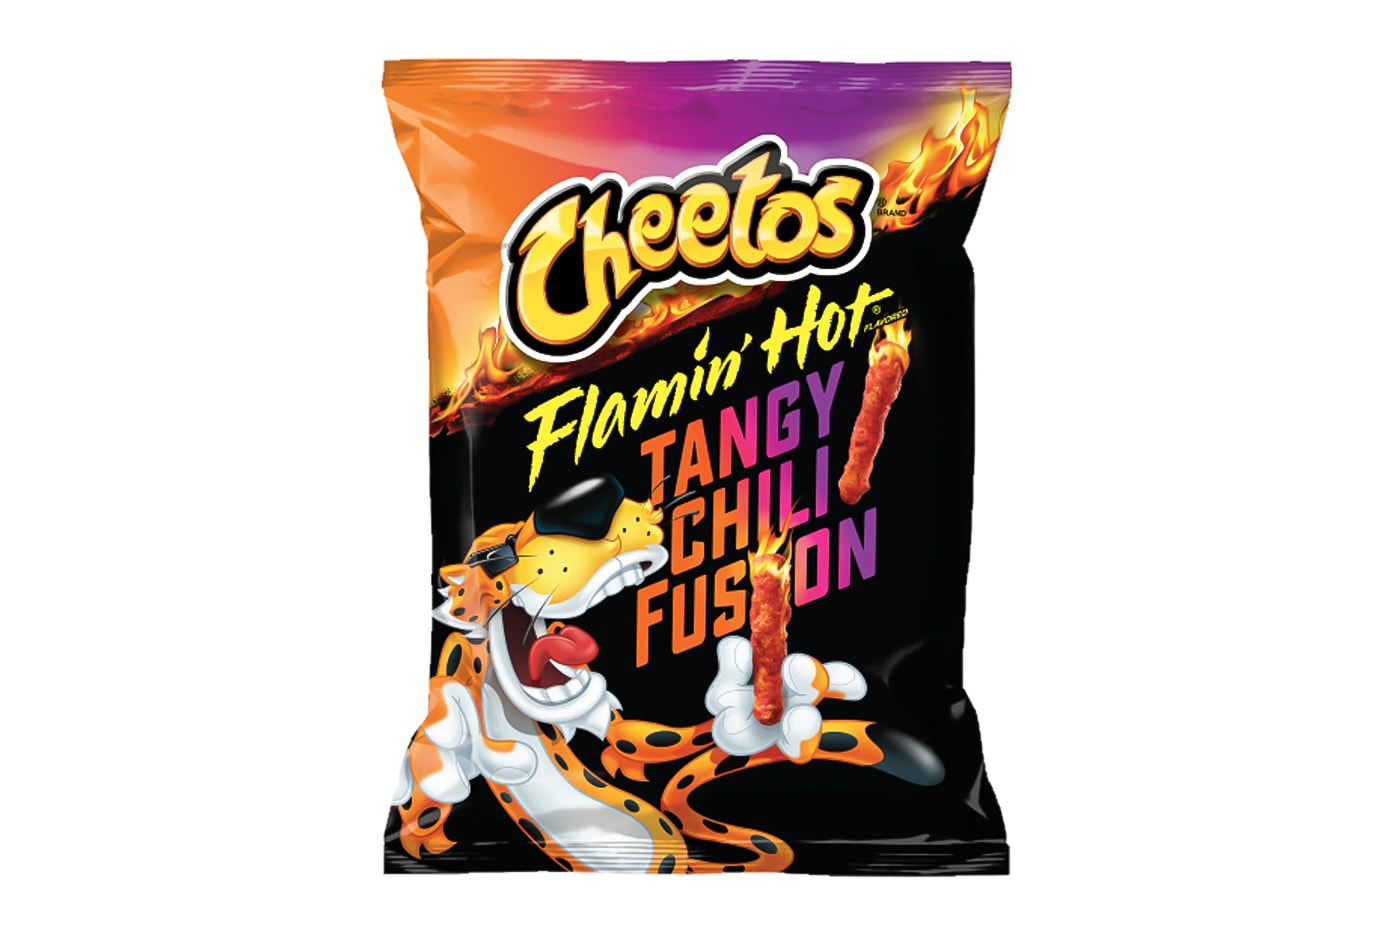 s Cheetos Duster Makes Any Food Cheesy